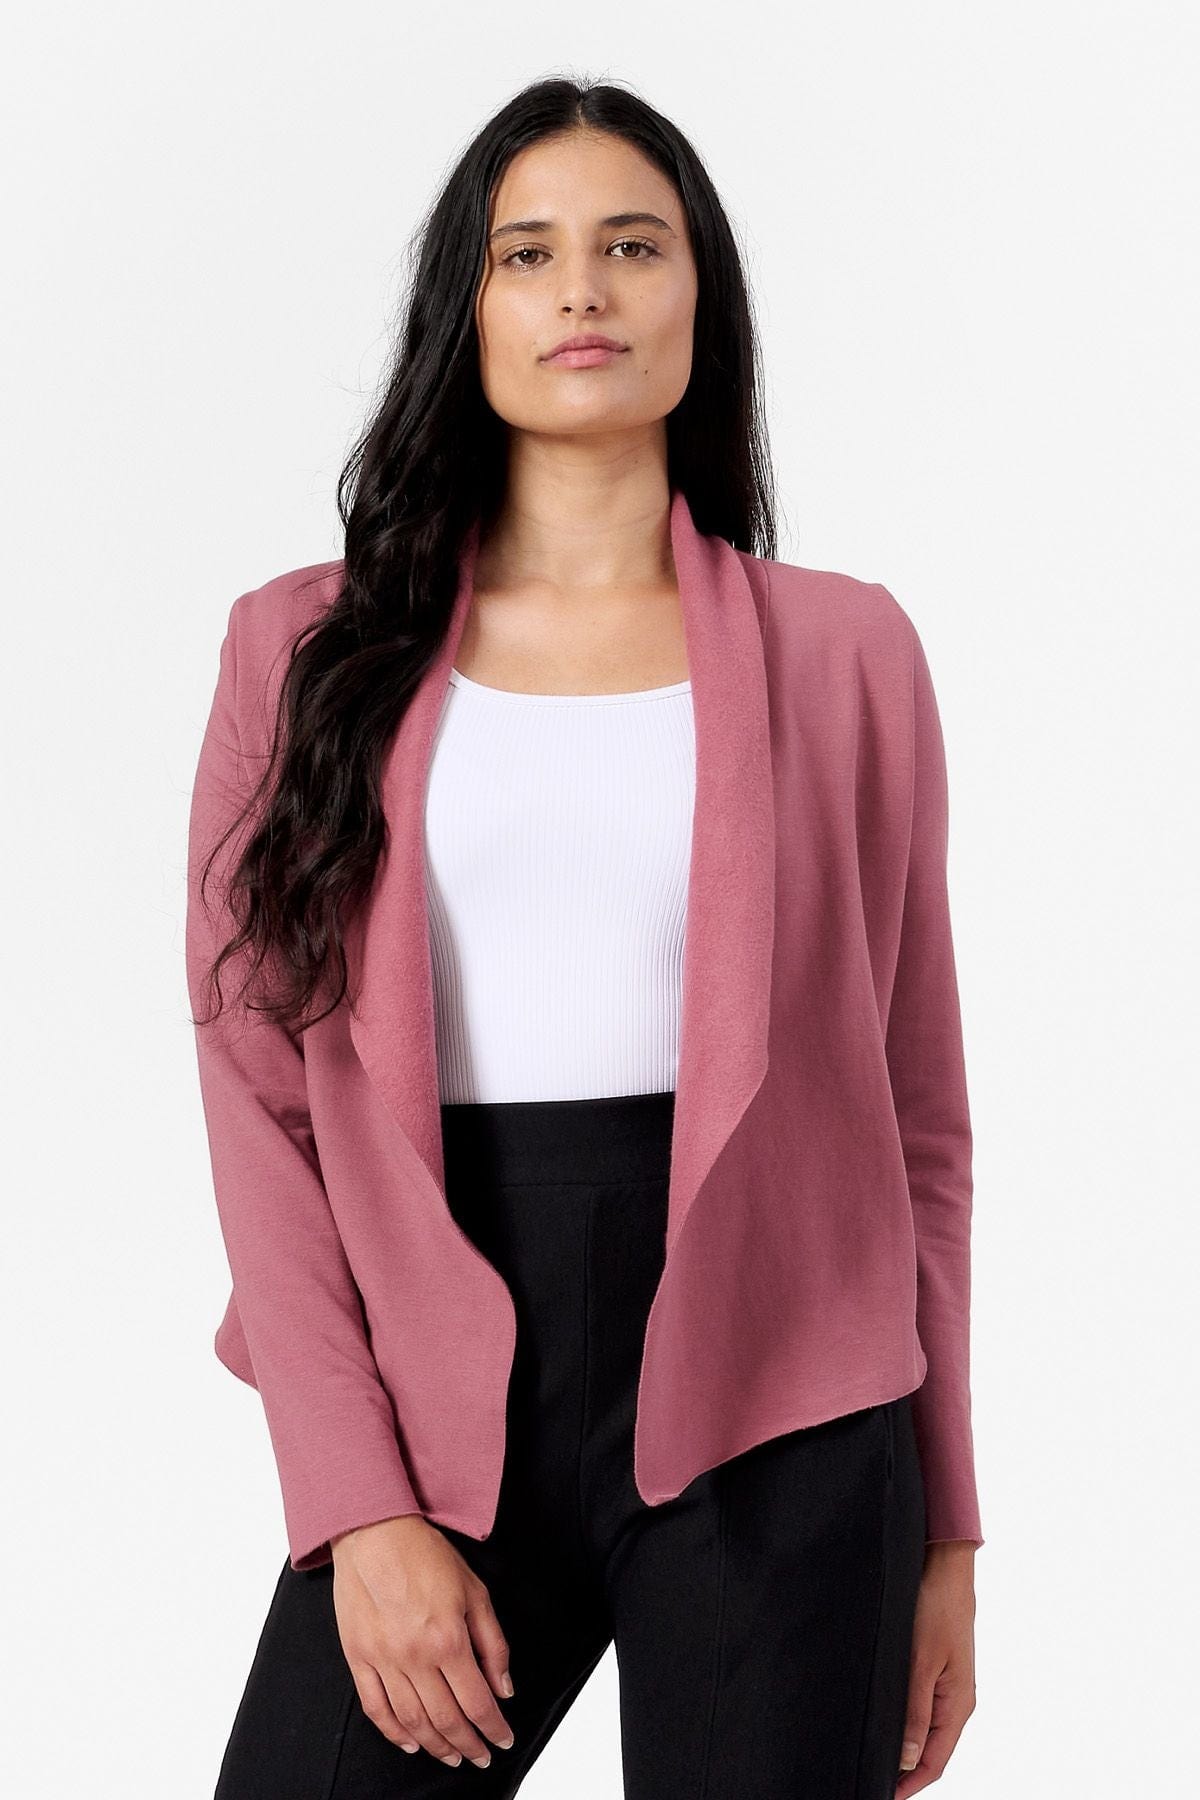 Woman wearing a pink jacket